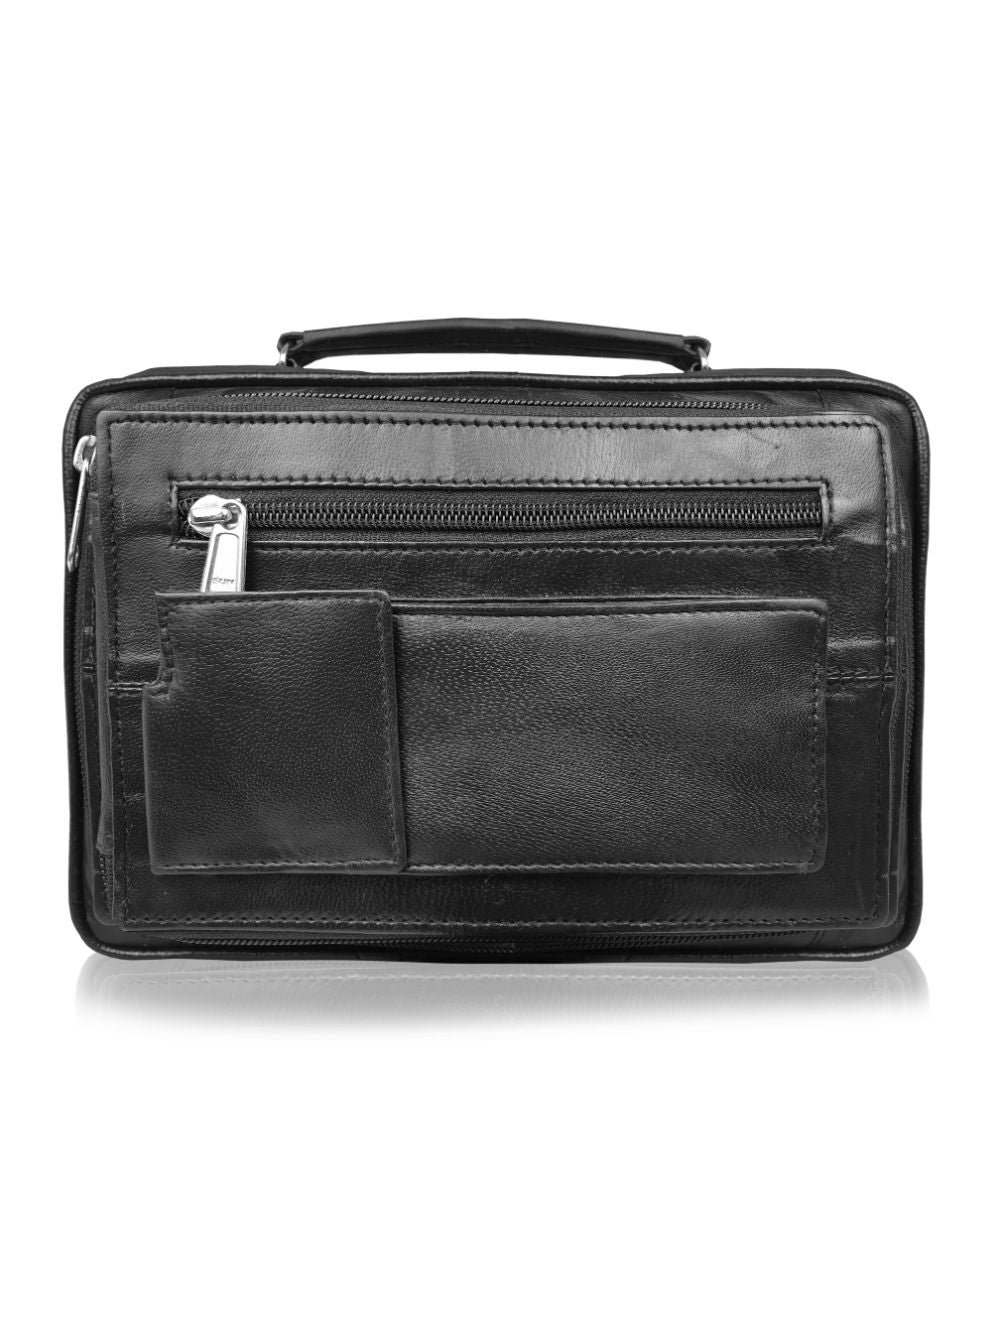 Roamlite Travel Orginizer bag Black Leather RL521 front 2